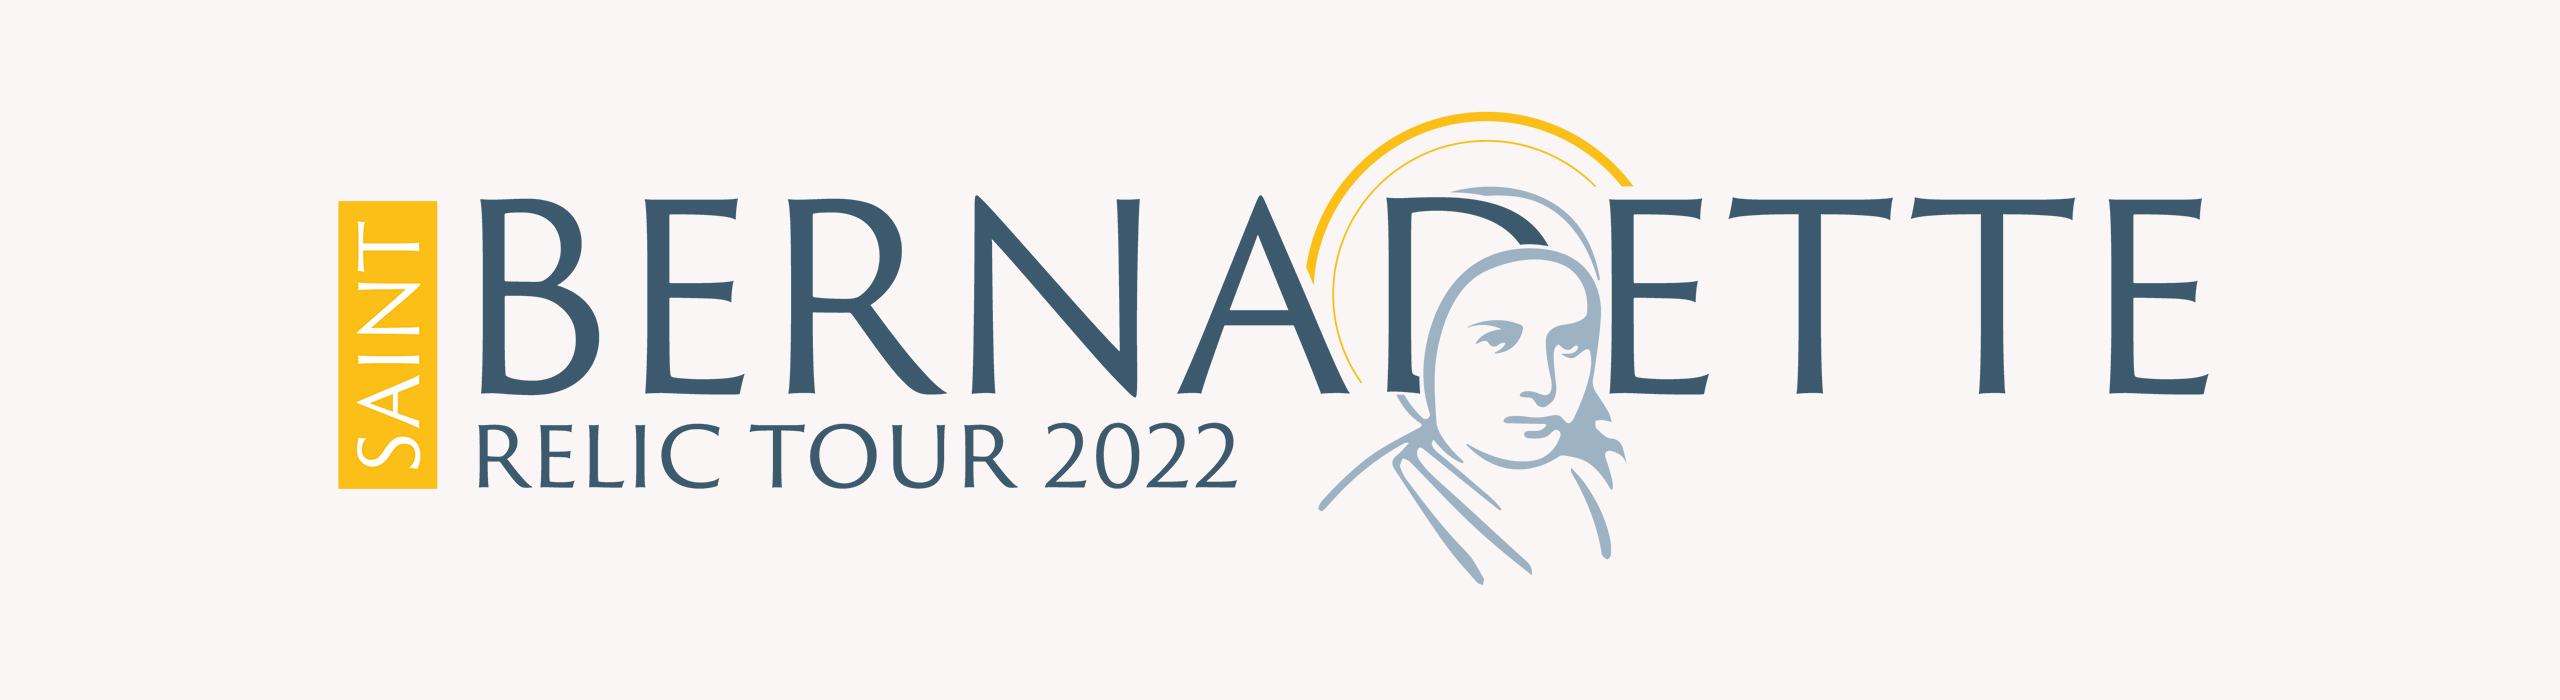 St Bernadette Relic Tour 2022 - Catholic Bishops' Conference